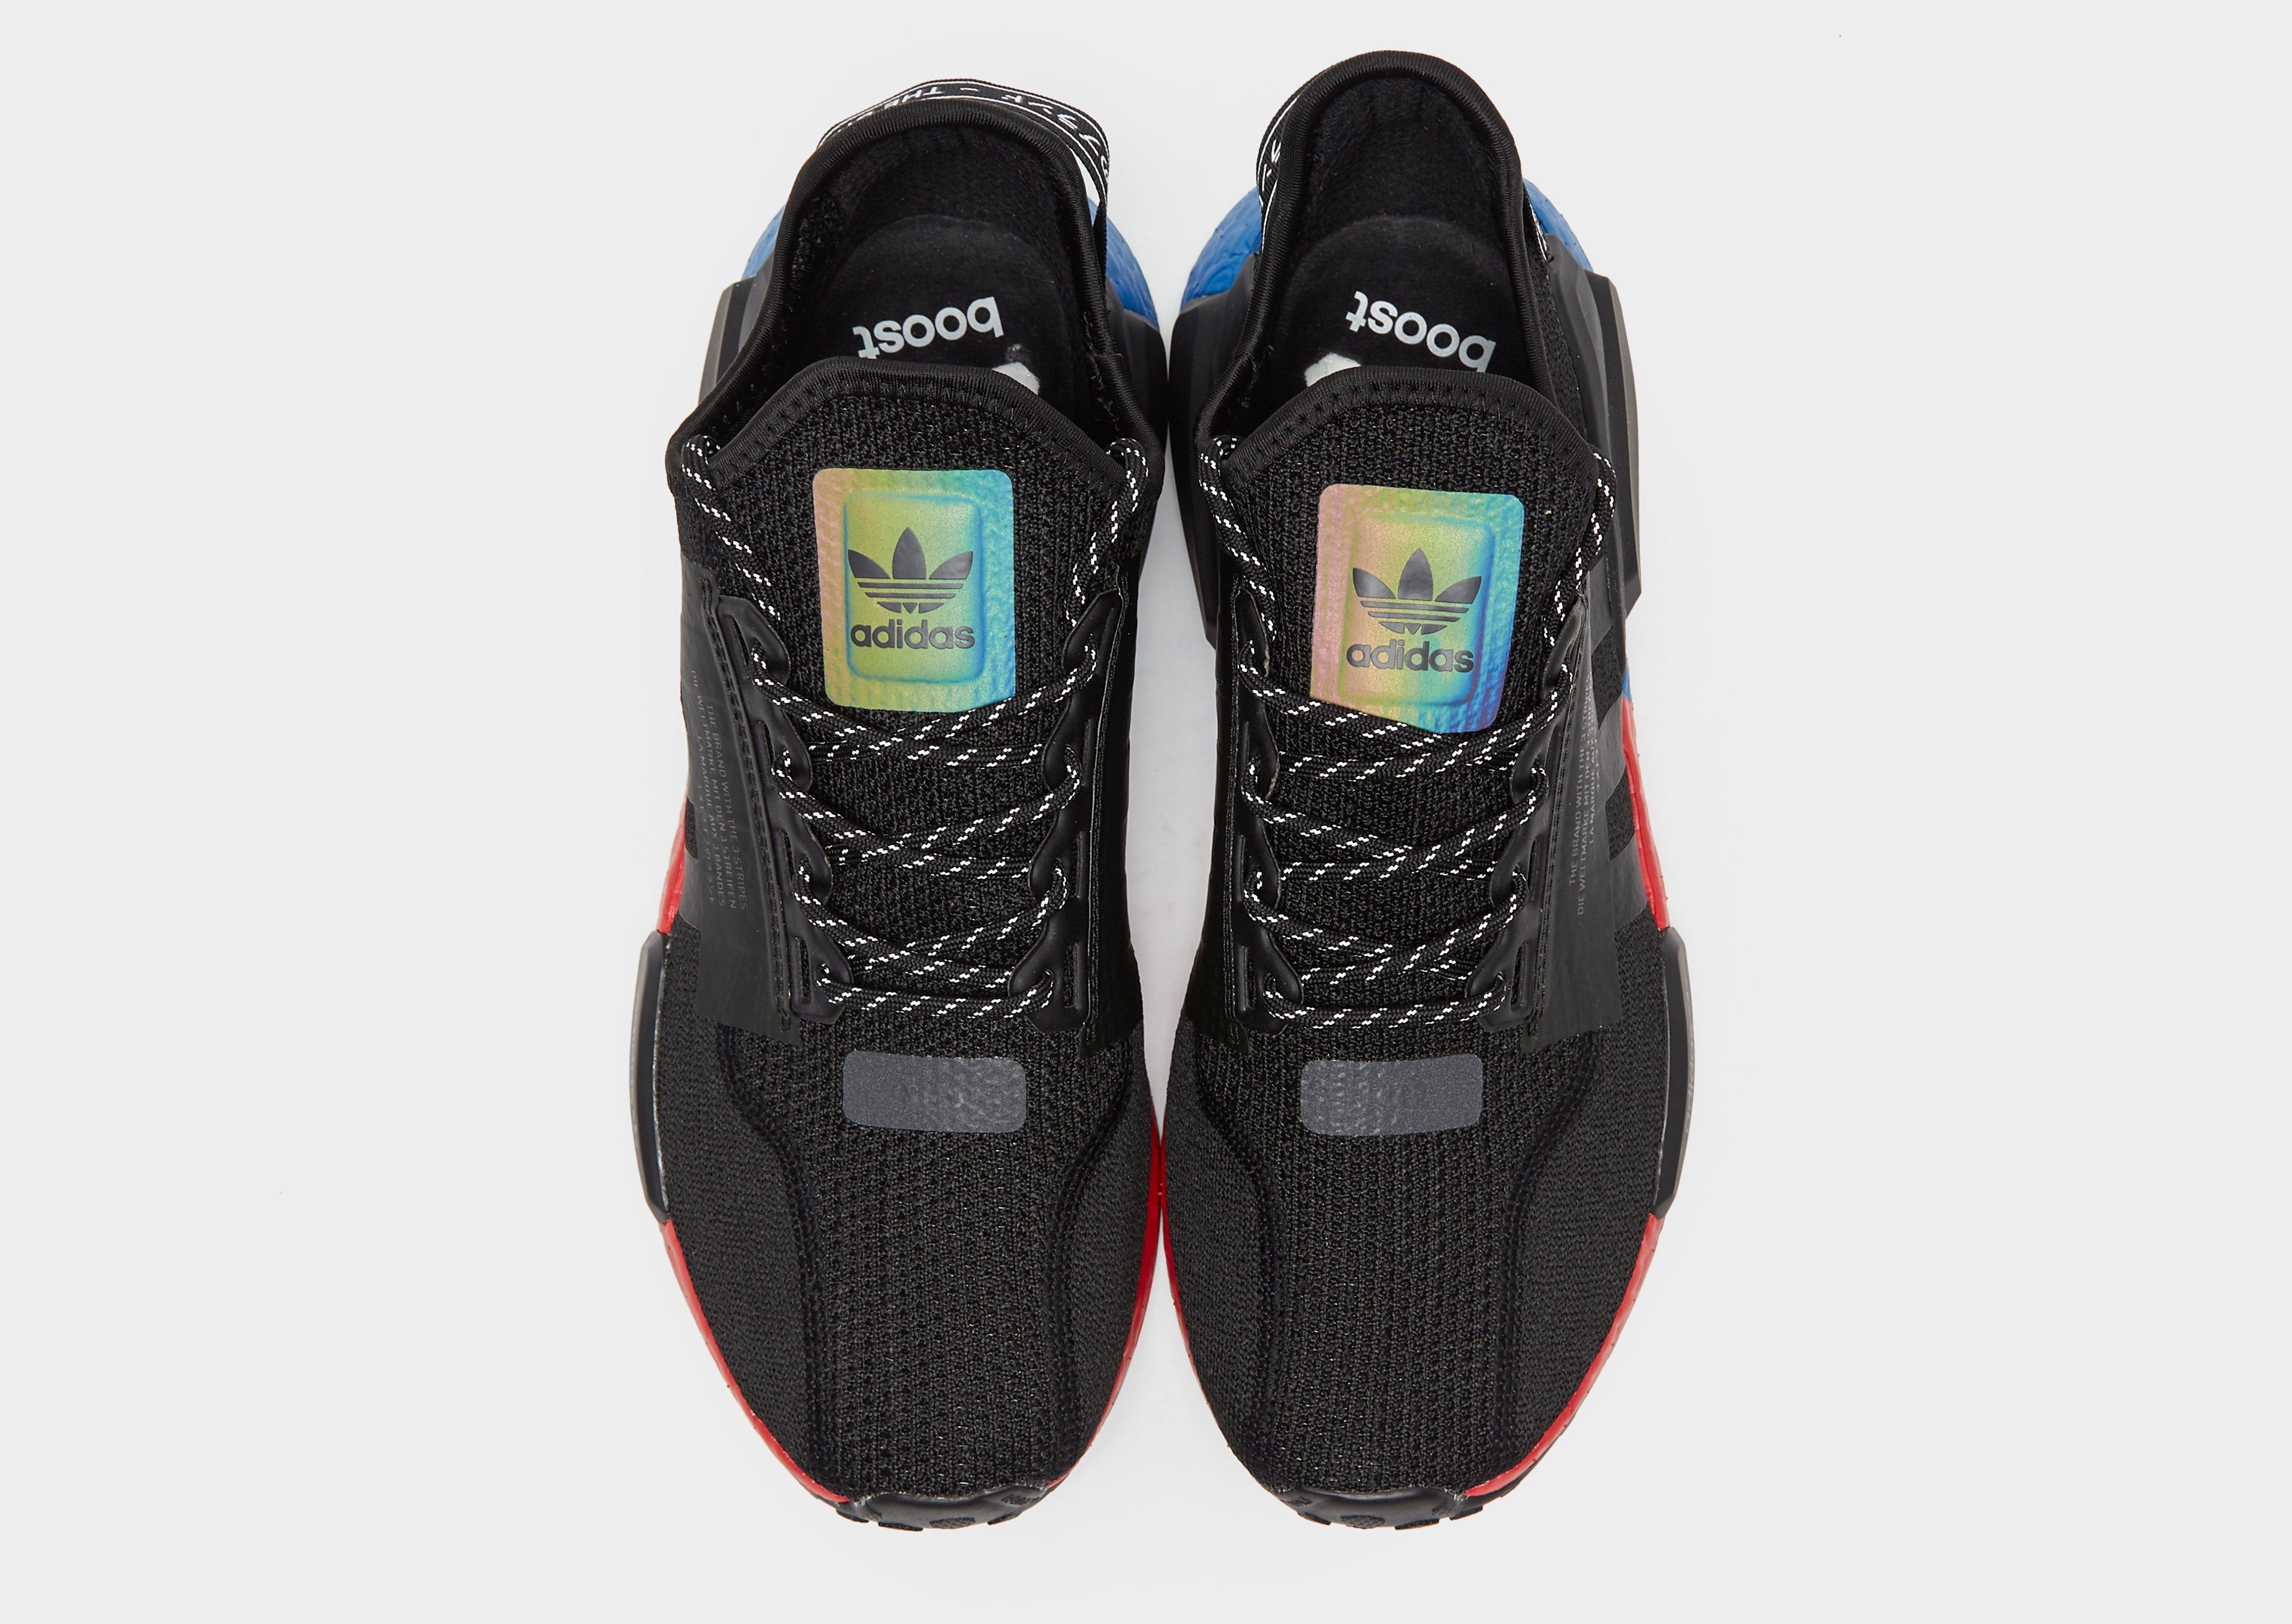 Adidas mens nmd runner r1 casual shoescom